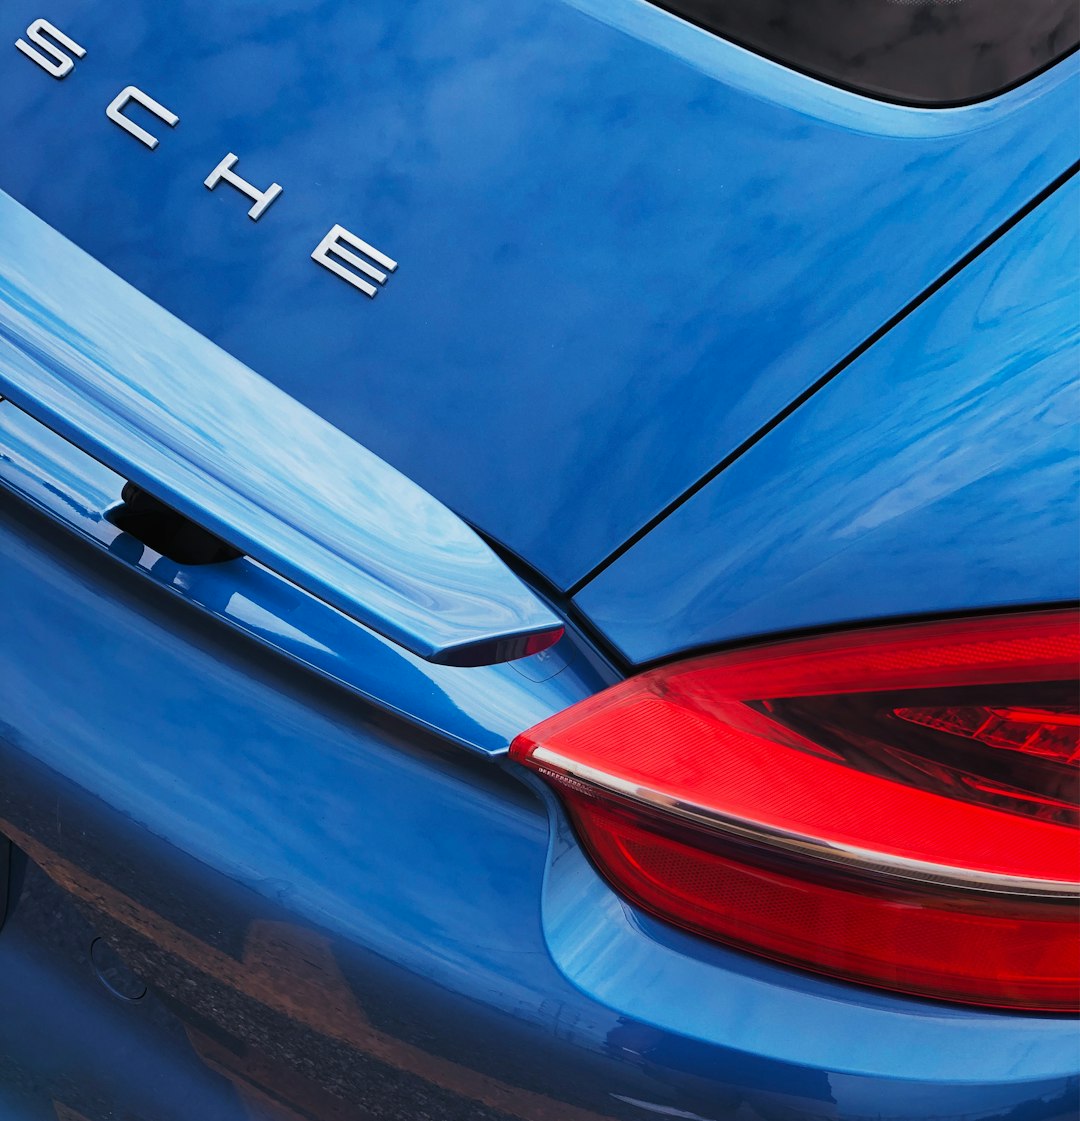 Blue Porsche by @beekay on Unsplash